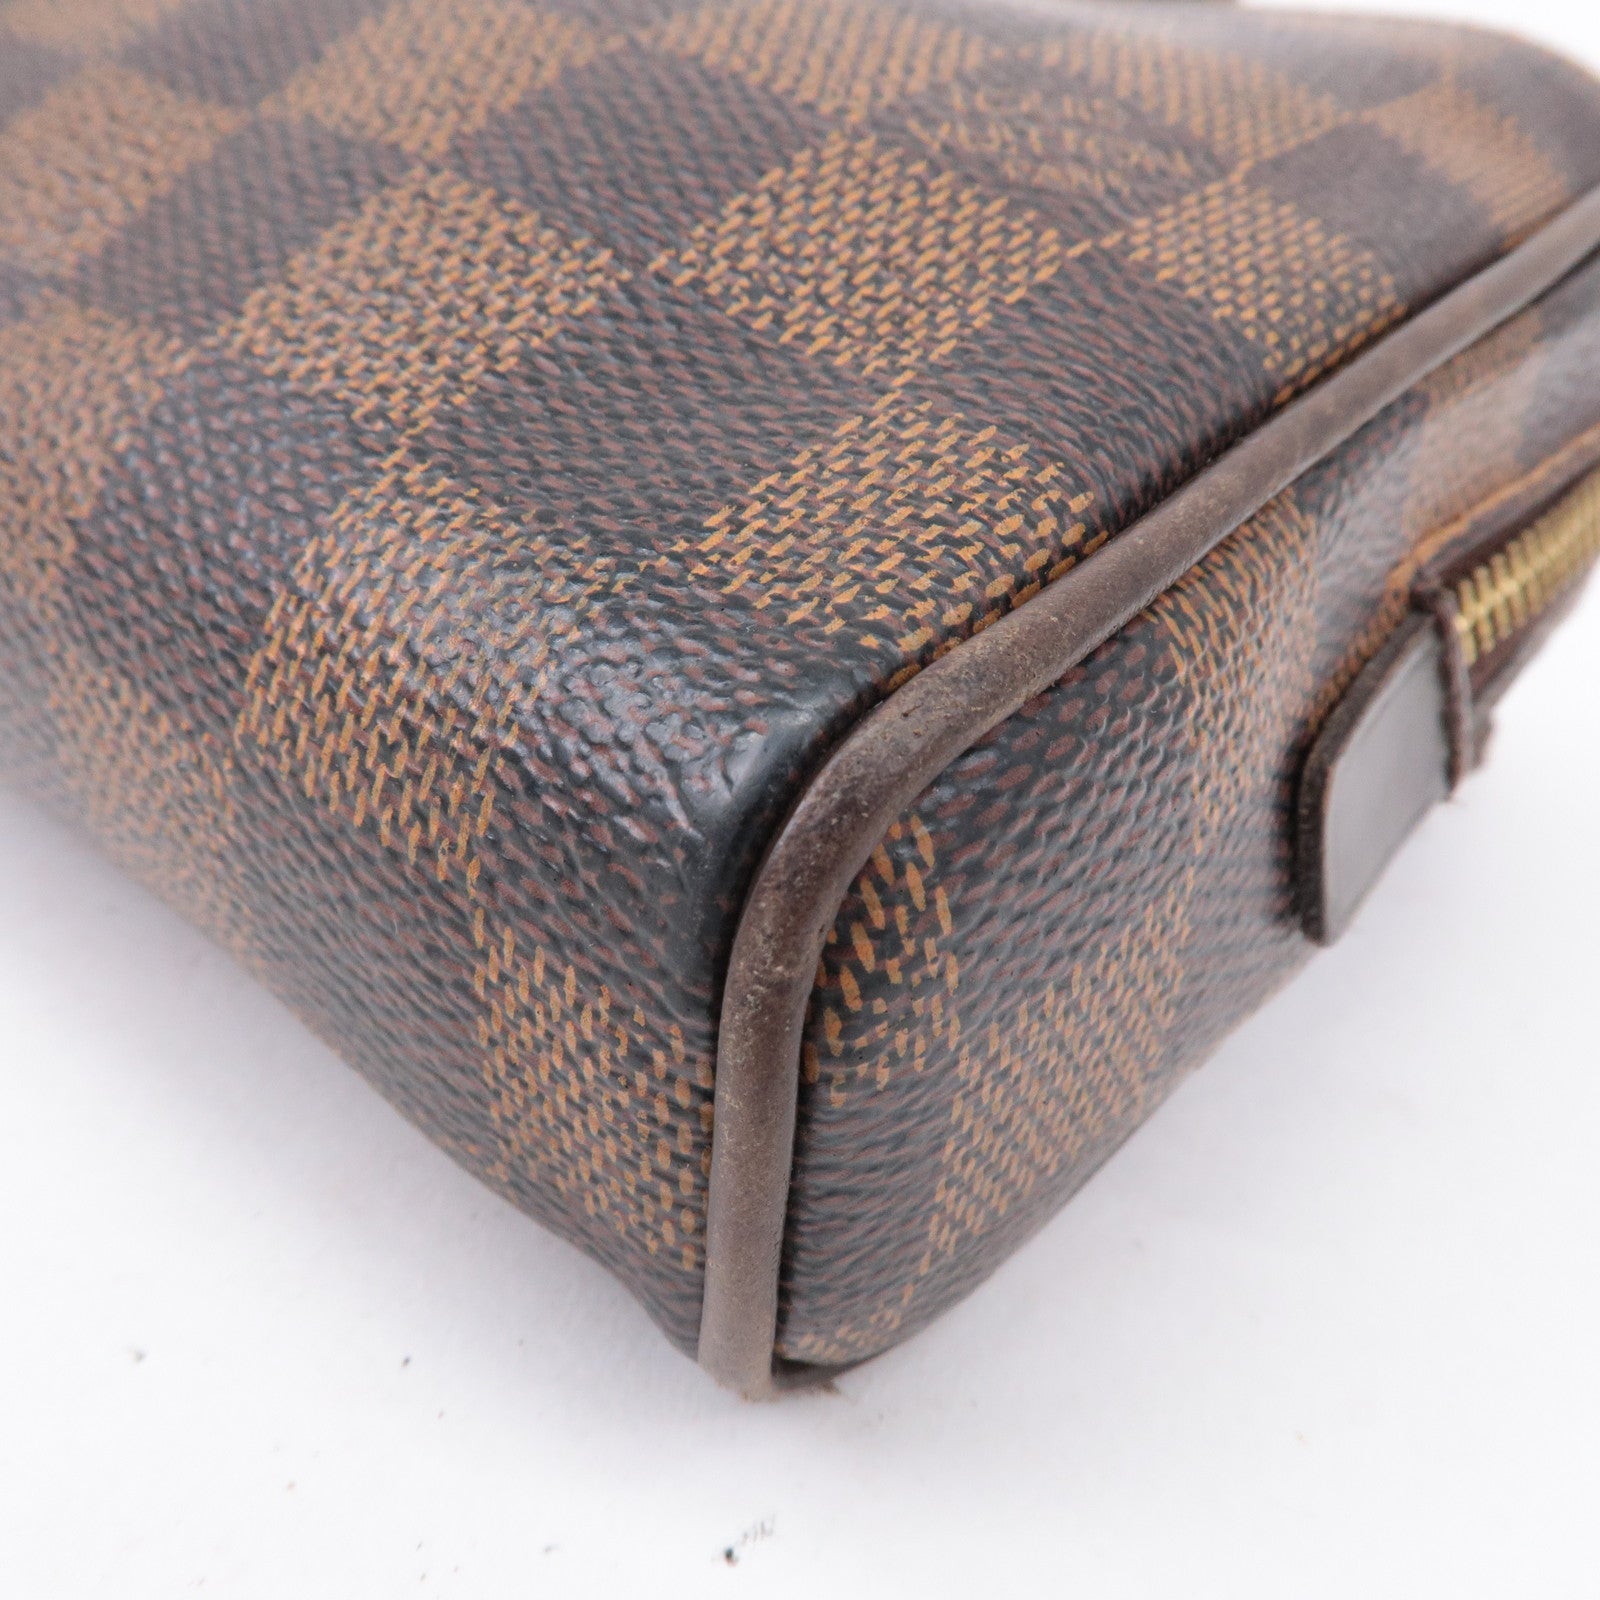 Louis-Vuitton-Damier-Ebene-Bum-Bag-Brooklyn-Waist-Bag-N41101 – dct